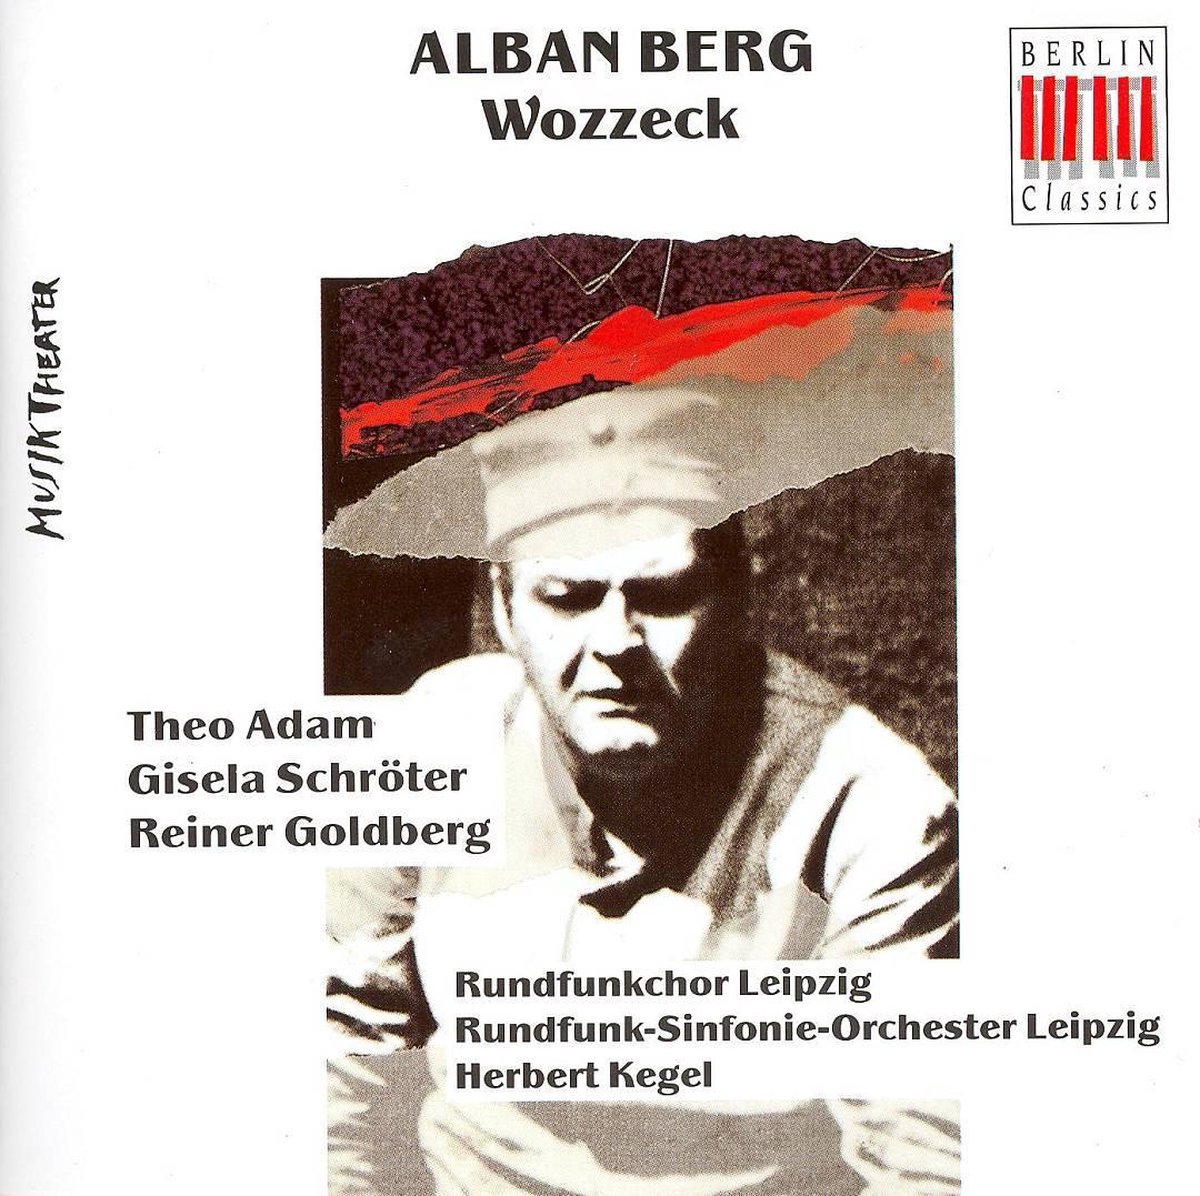 Eterna - Berg: Wozzeck / Kegel, Adam, Schroter, Goldberg, Herbert Kegel |  CD (album) |... | bol.com